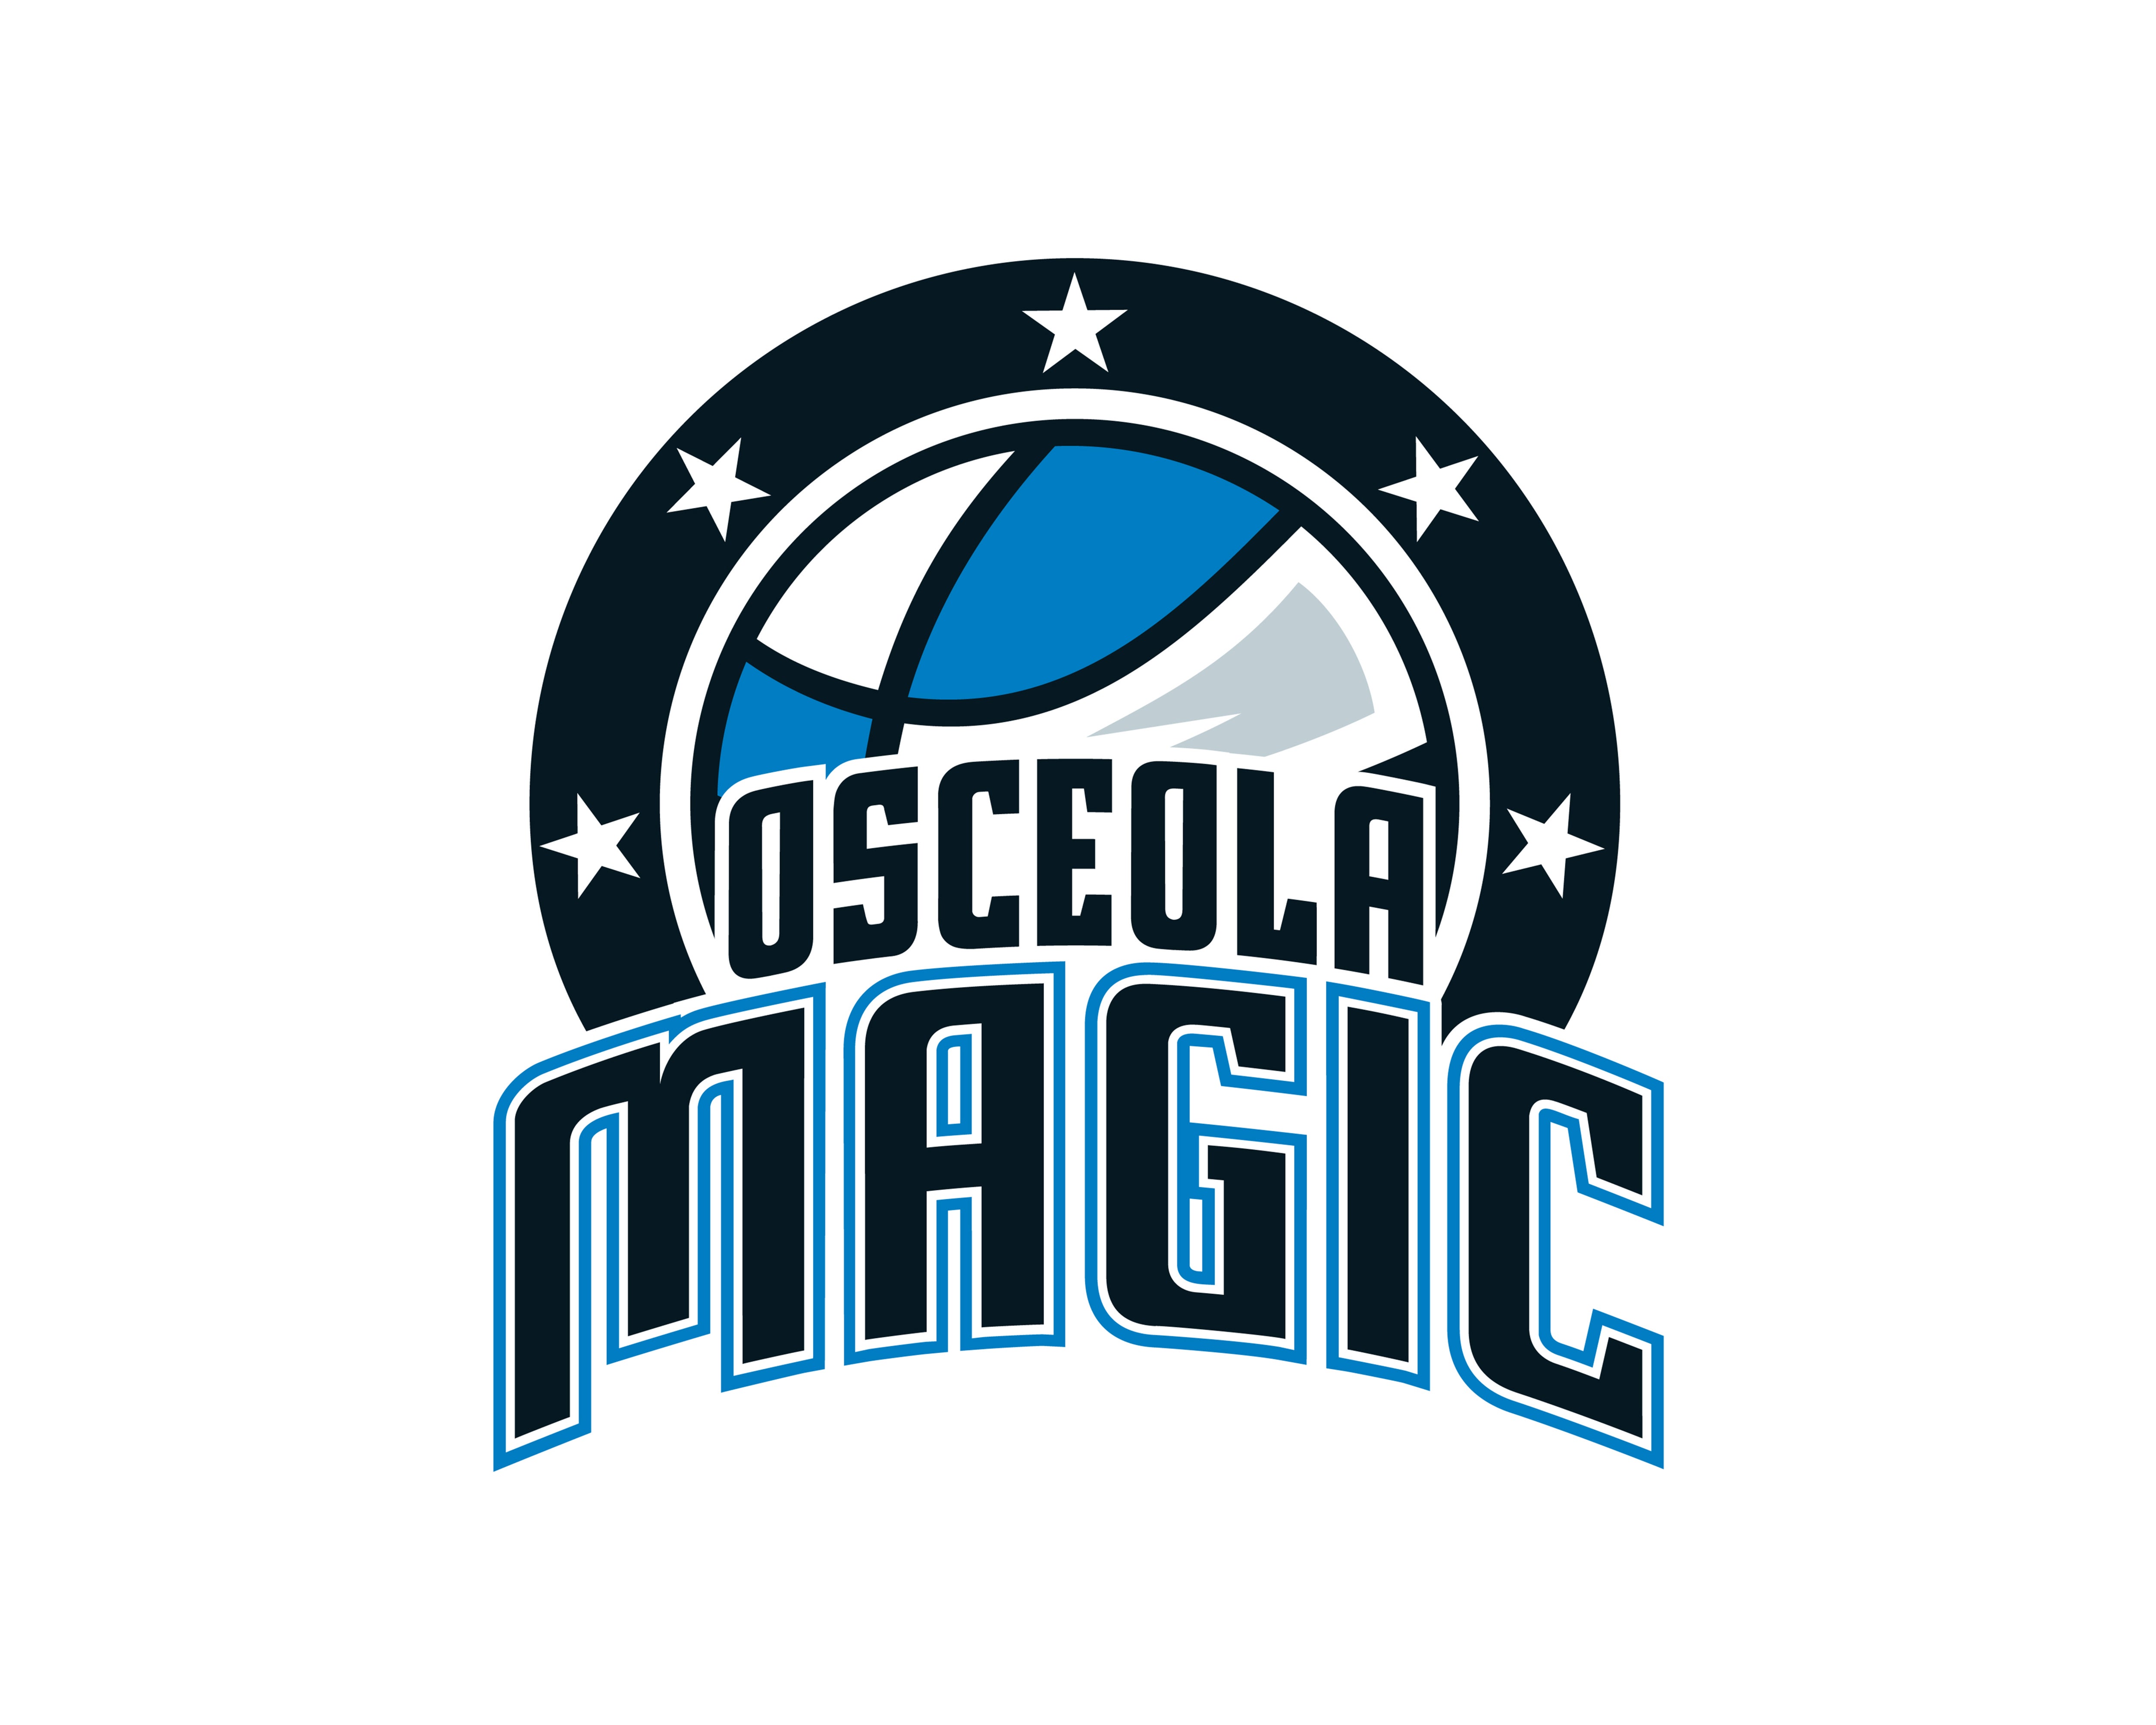 Osceola Magic vs. Raptors 905